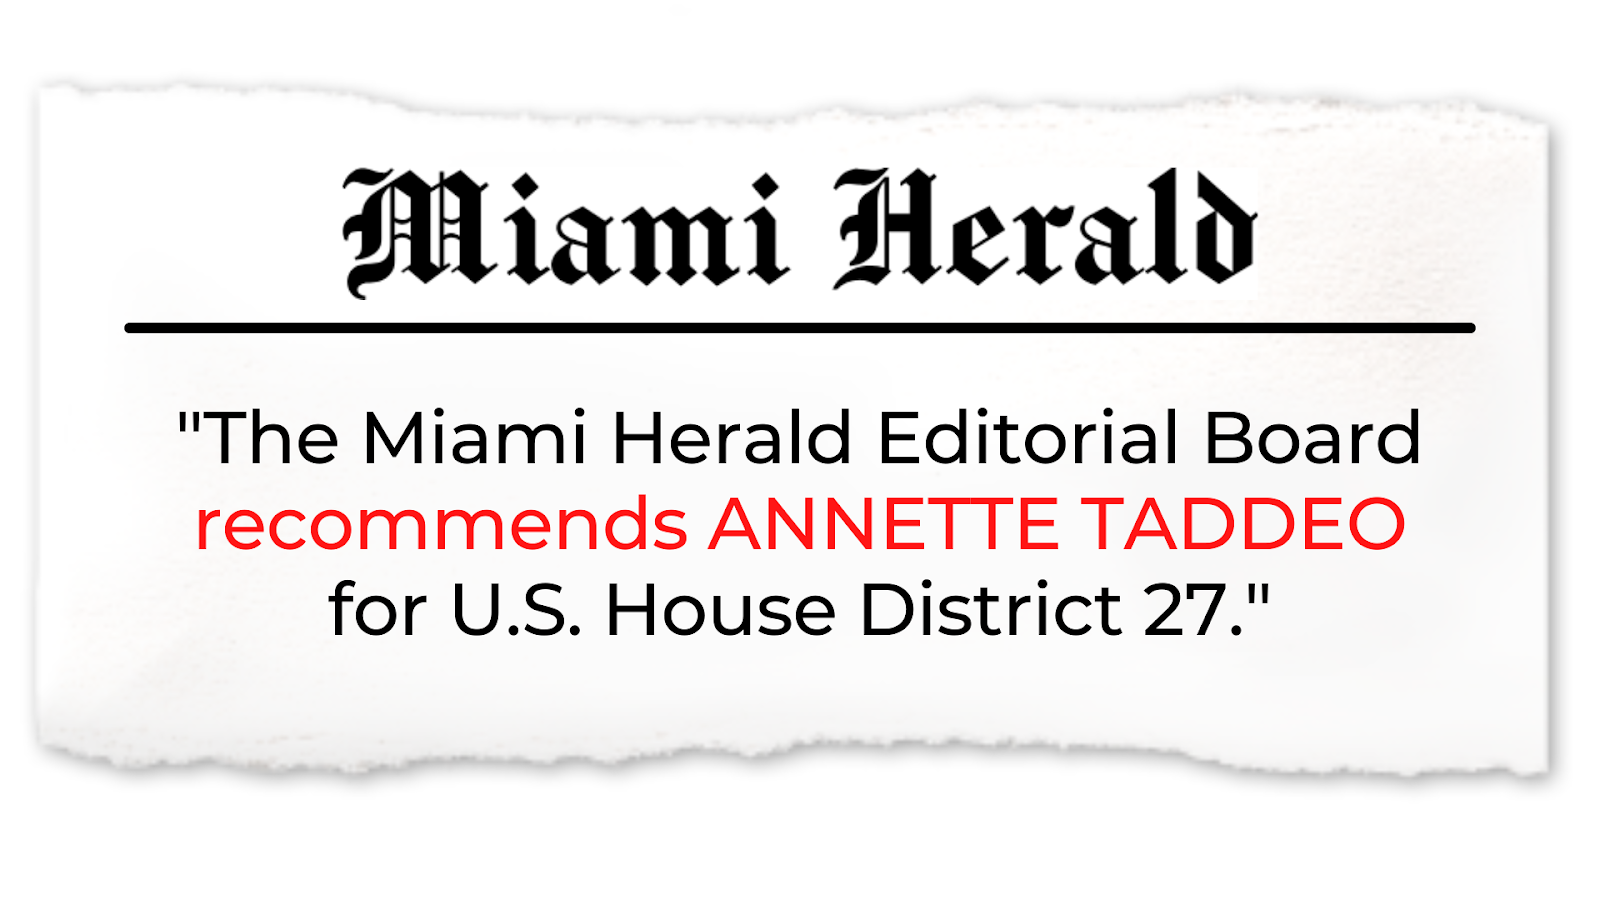 Miami Herald: "The Miami Herald Editorial Board recommends Annette Taddeo for U.S. House District 27."